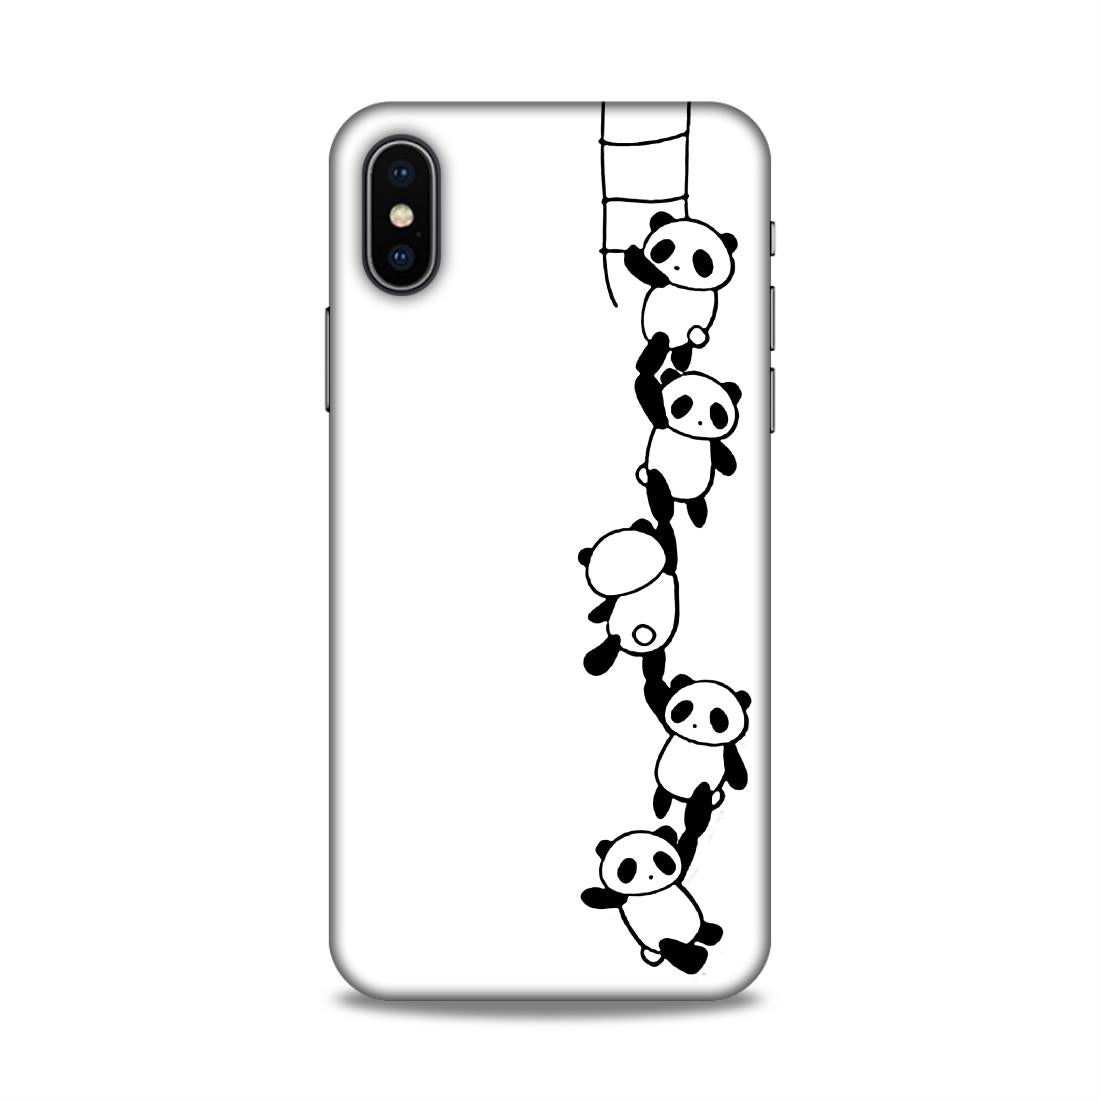 Panda Hard Back Case For Apple iPhone X/XS